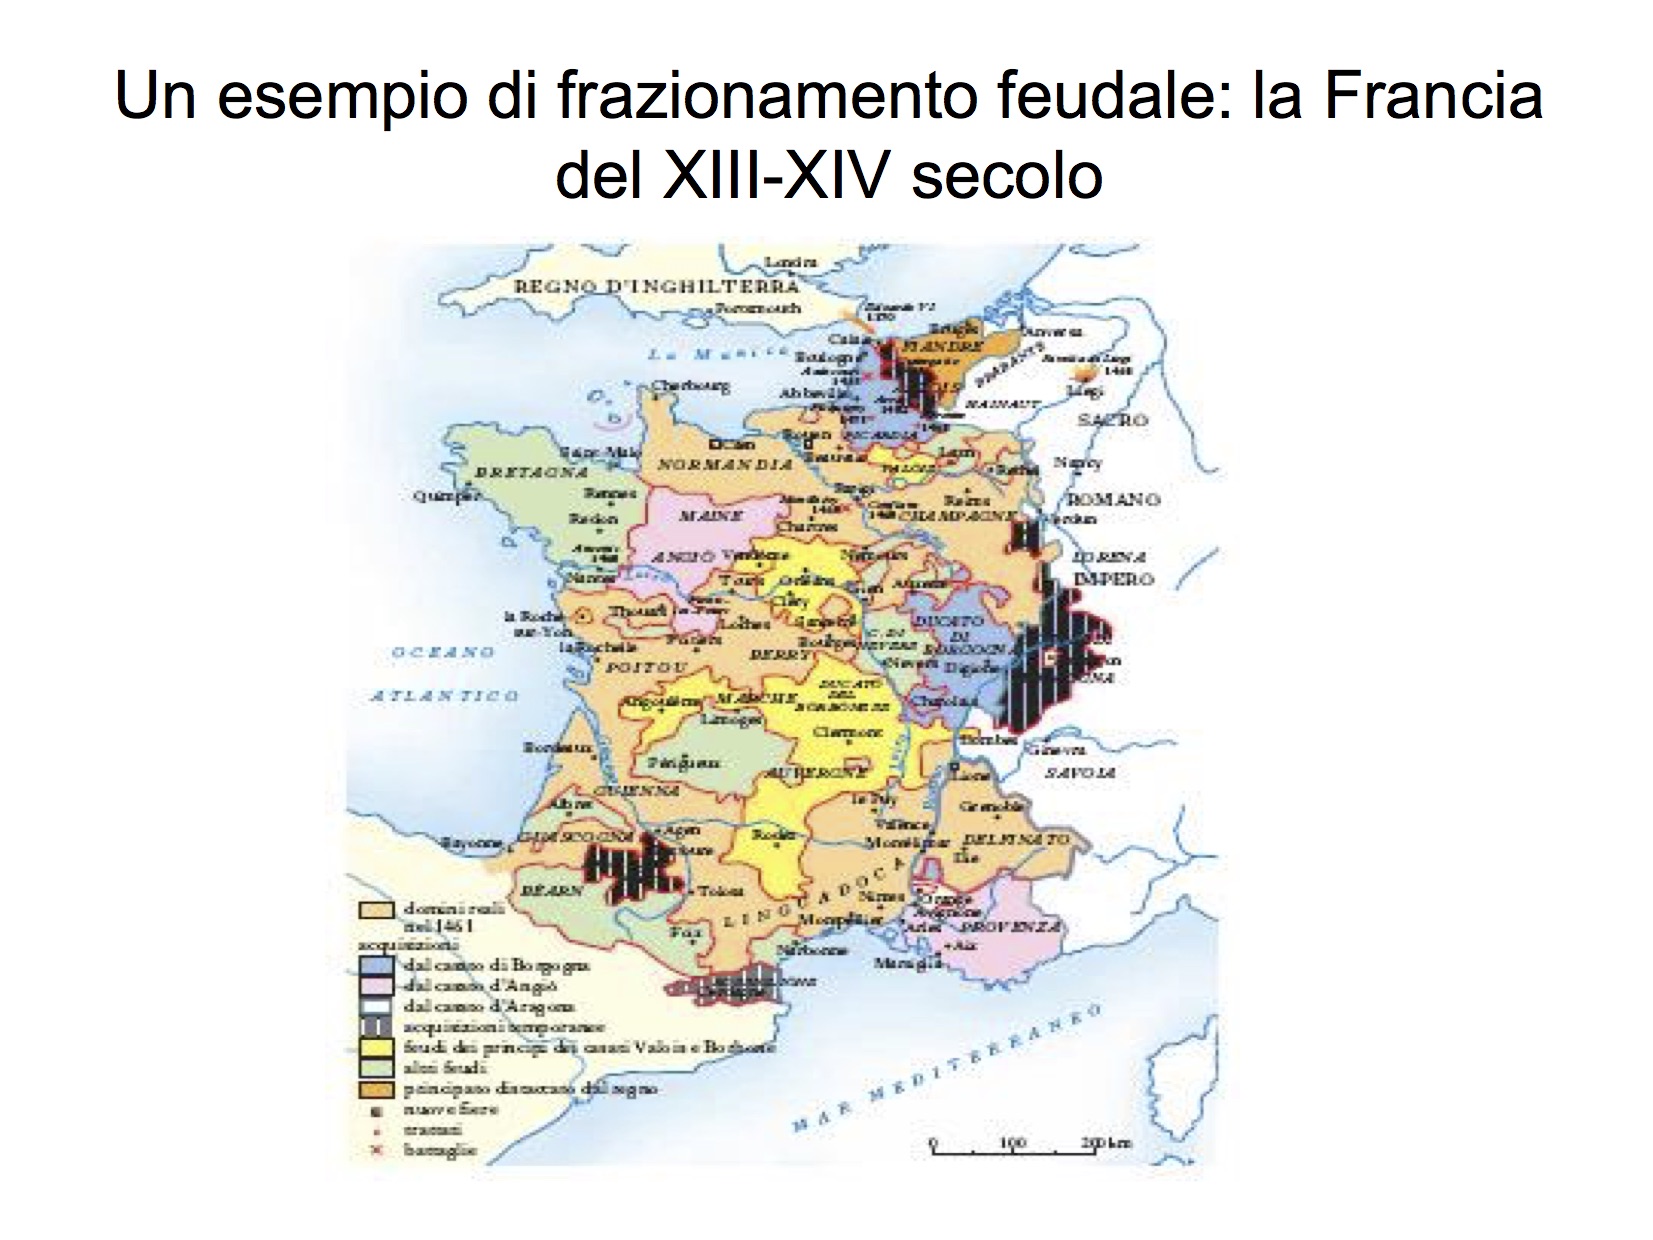 Frazionamento feudale Francia